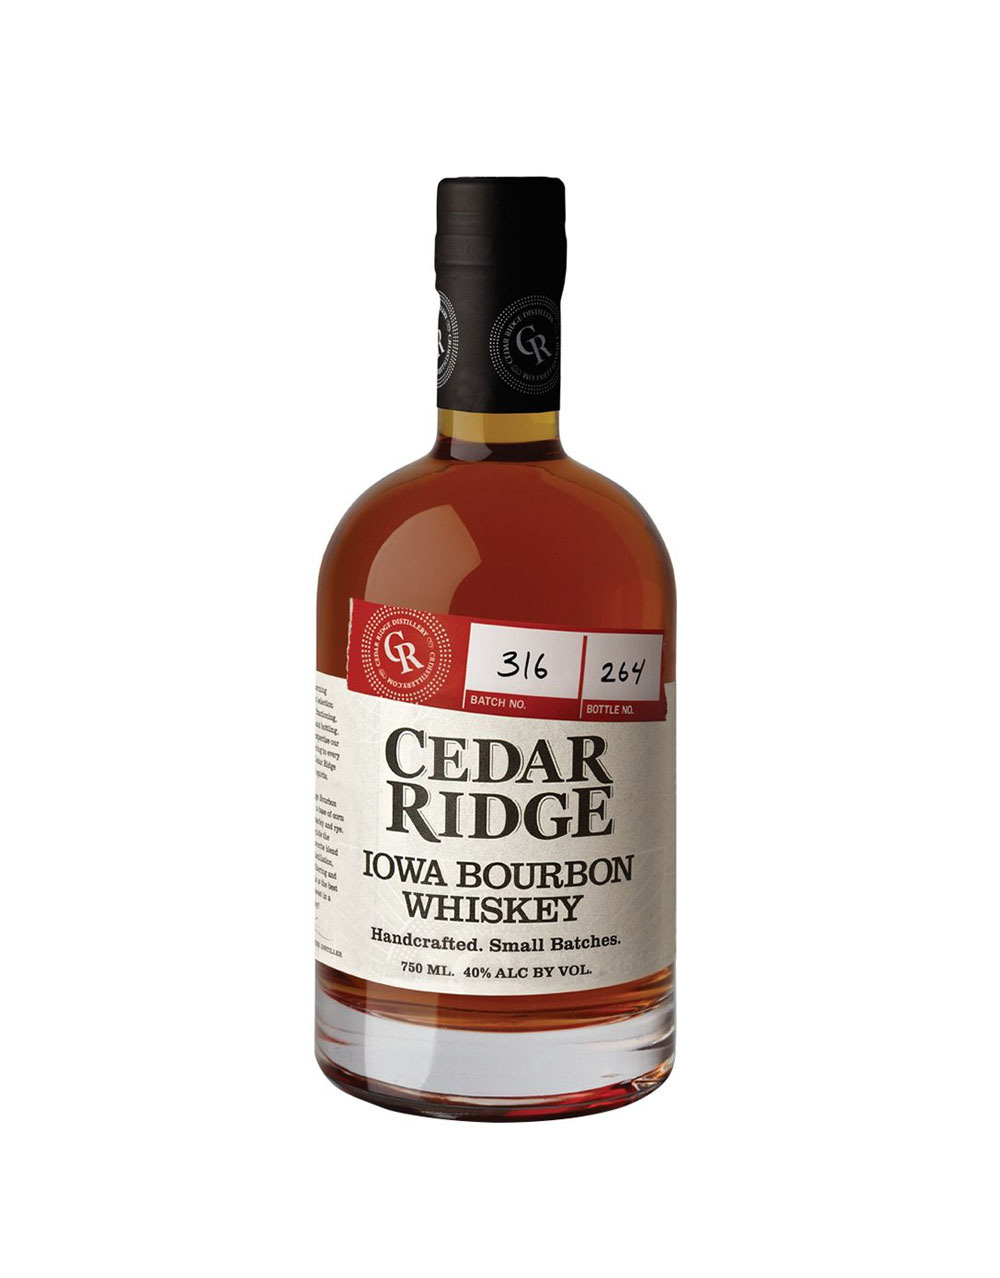 Southern Star Standard High Rye Straight Bourbon Whiskey